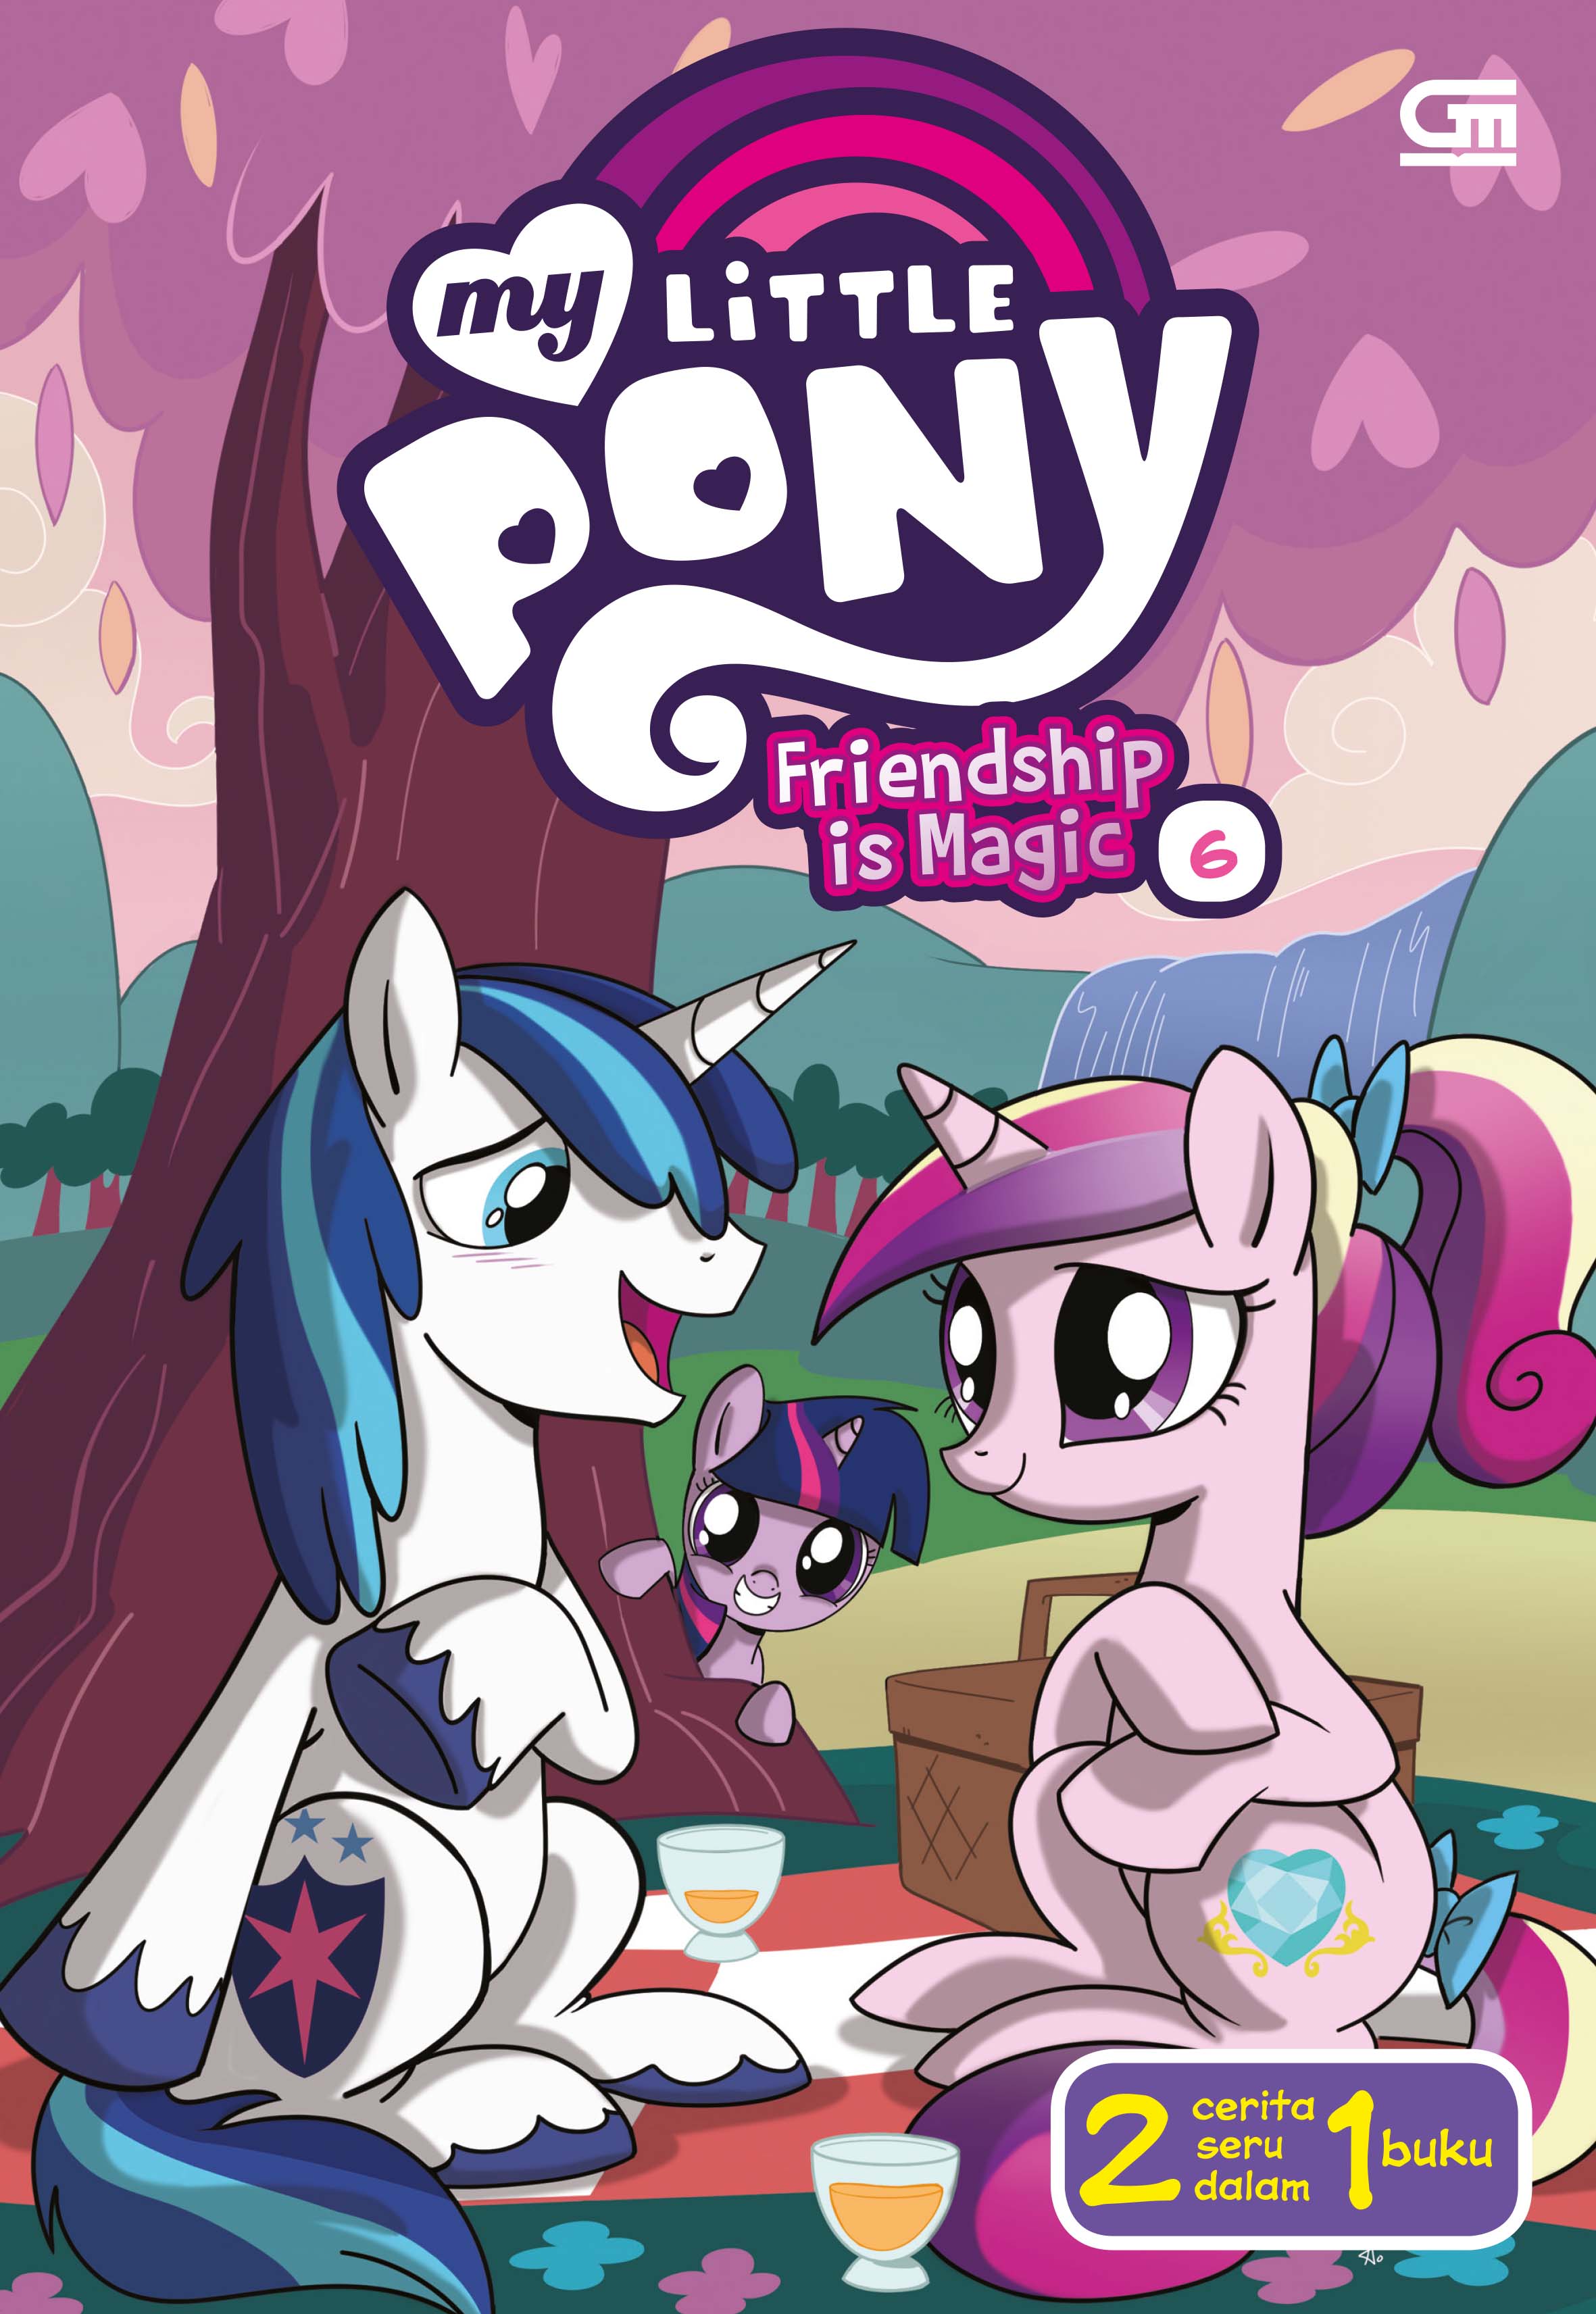 My little pony friendship is magic : vol. 6